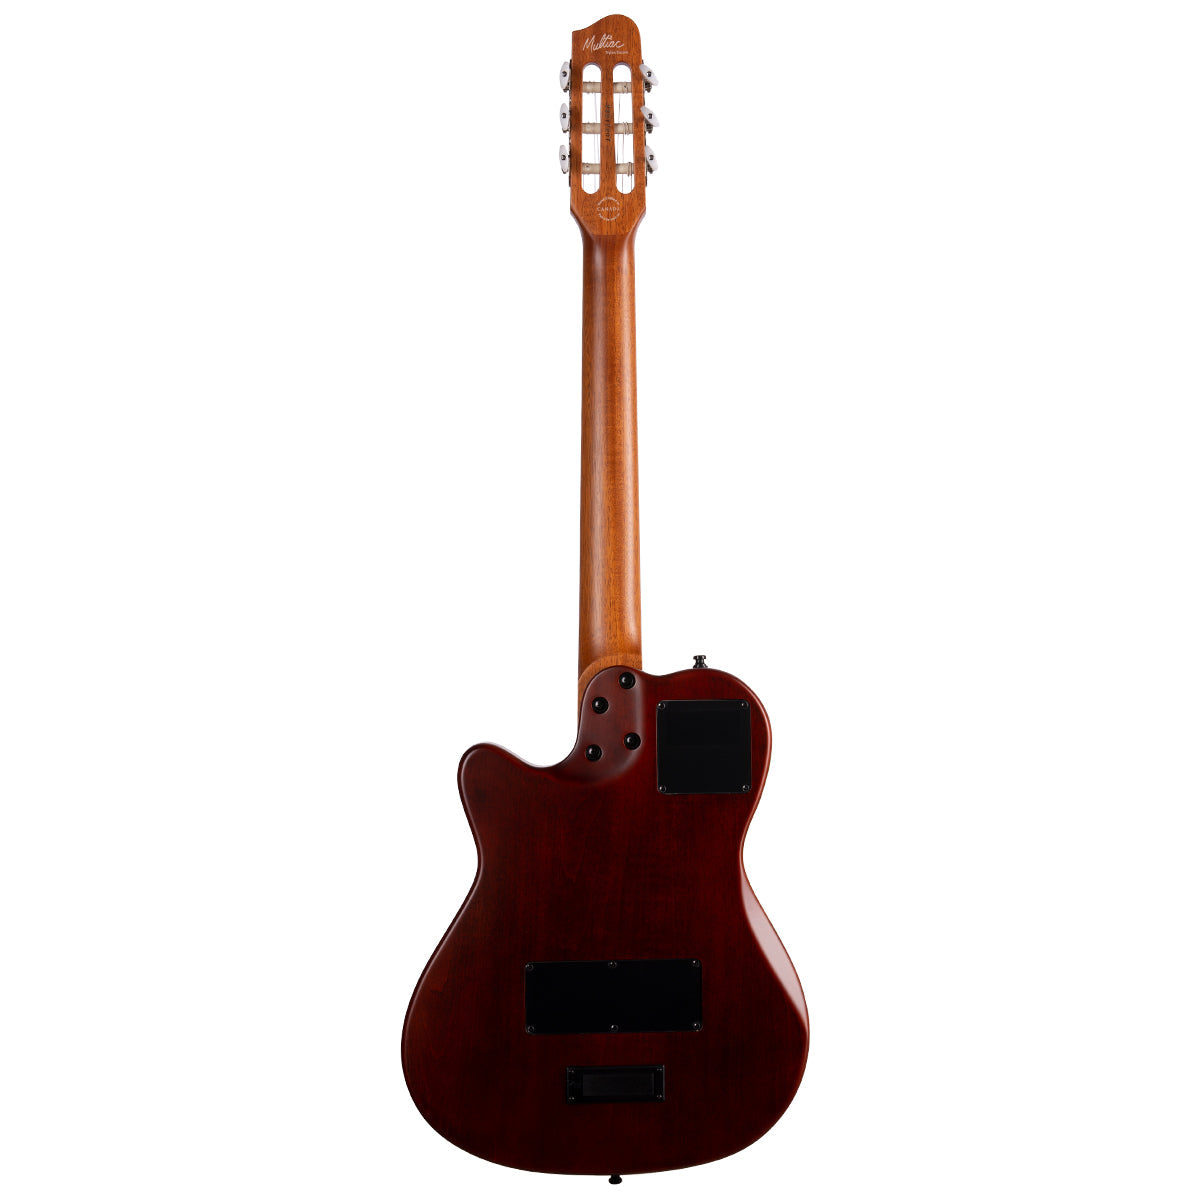 Godin Multiac Nylon Encore Guitar ~ Natural, Electric Guitar for sale at Richards Guitars.